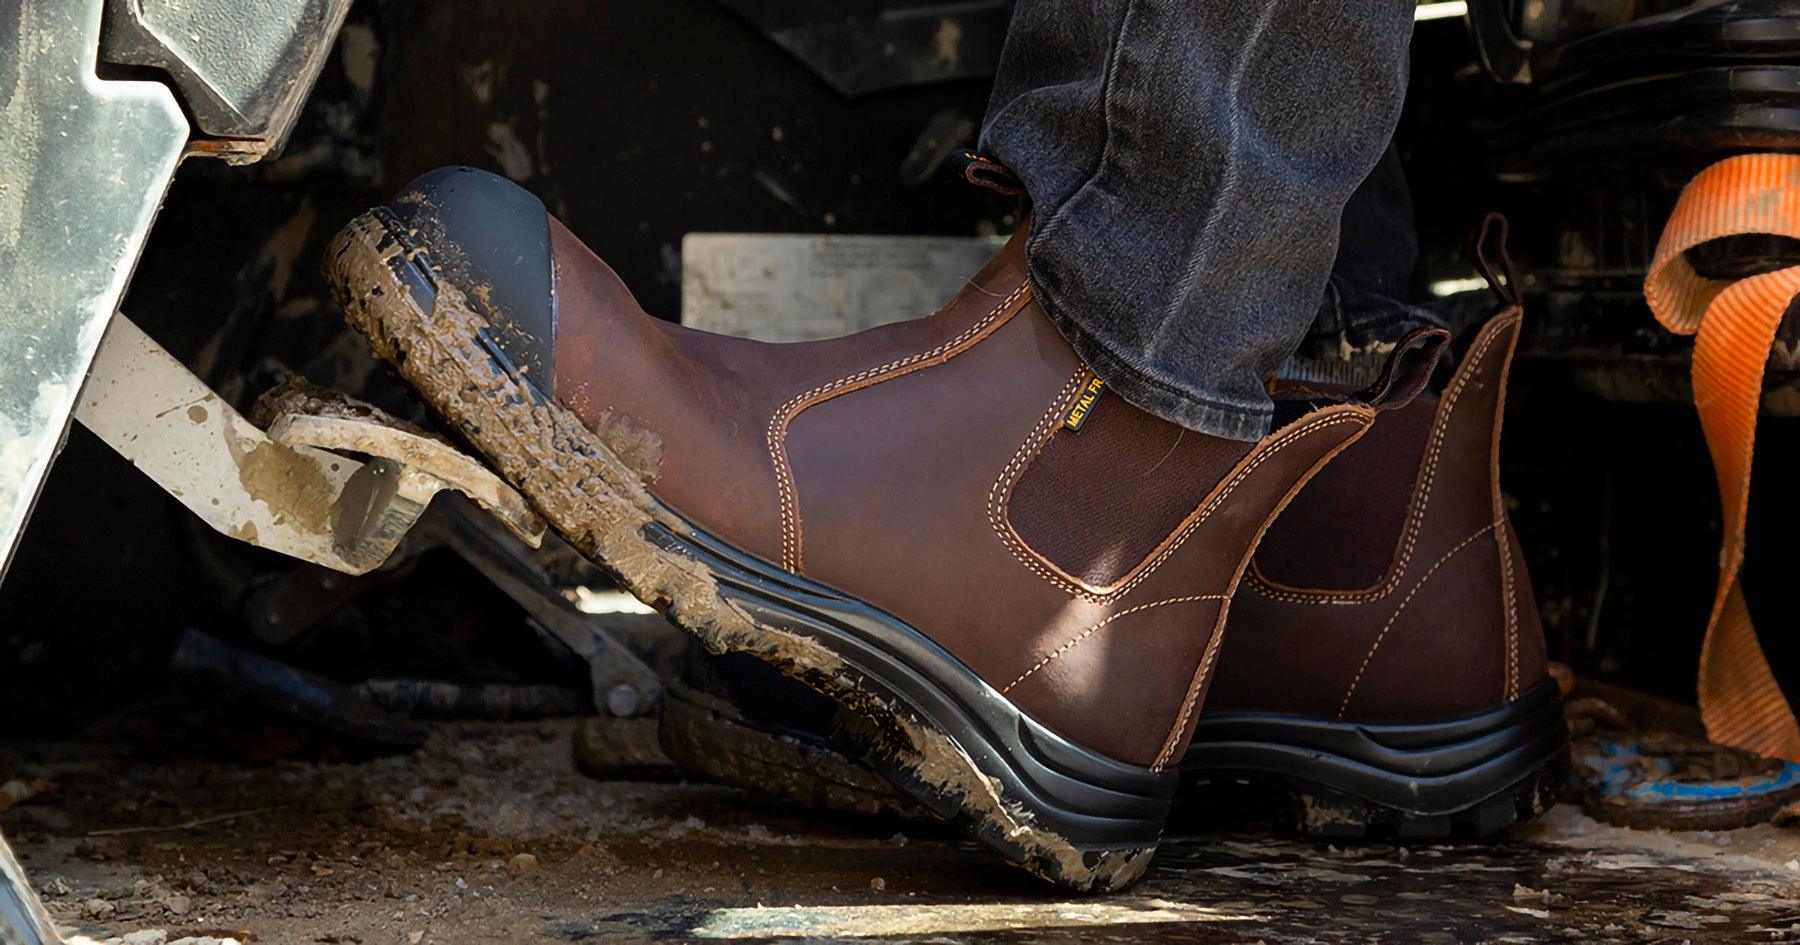 Best Steel Toe Boots Canada - MooseLog